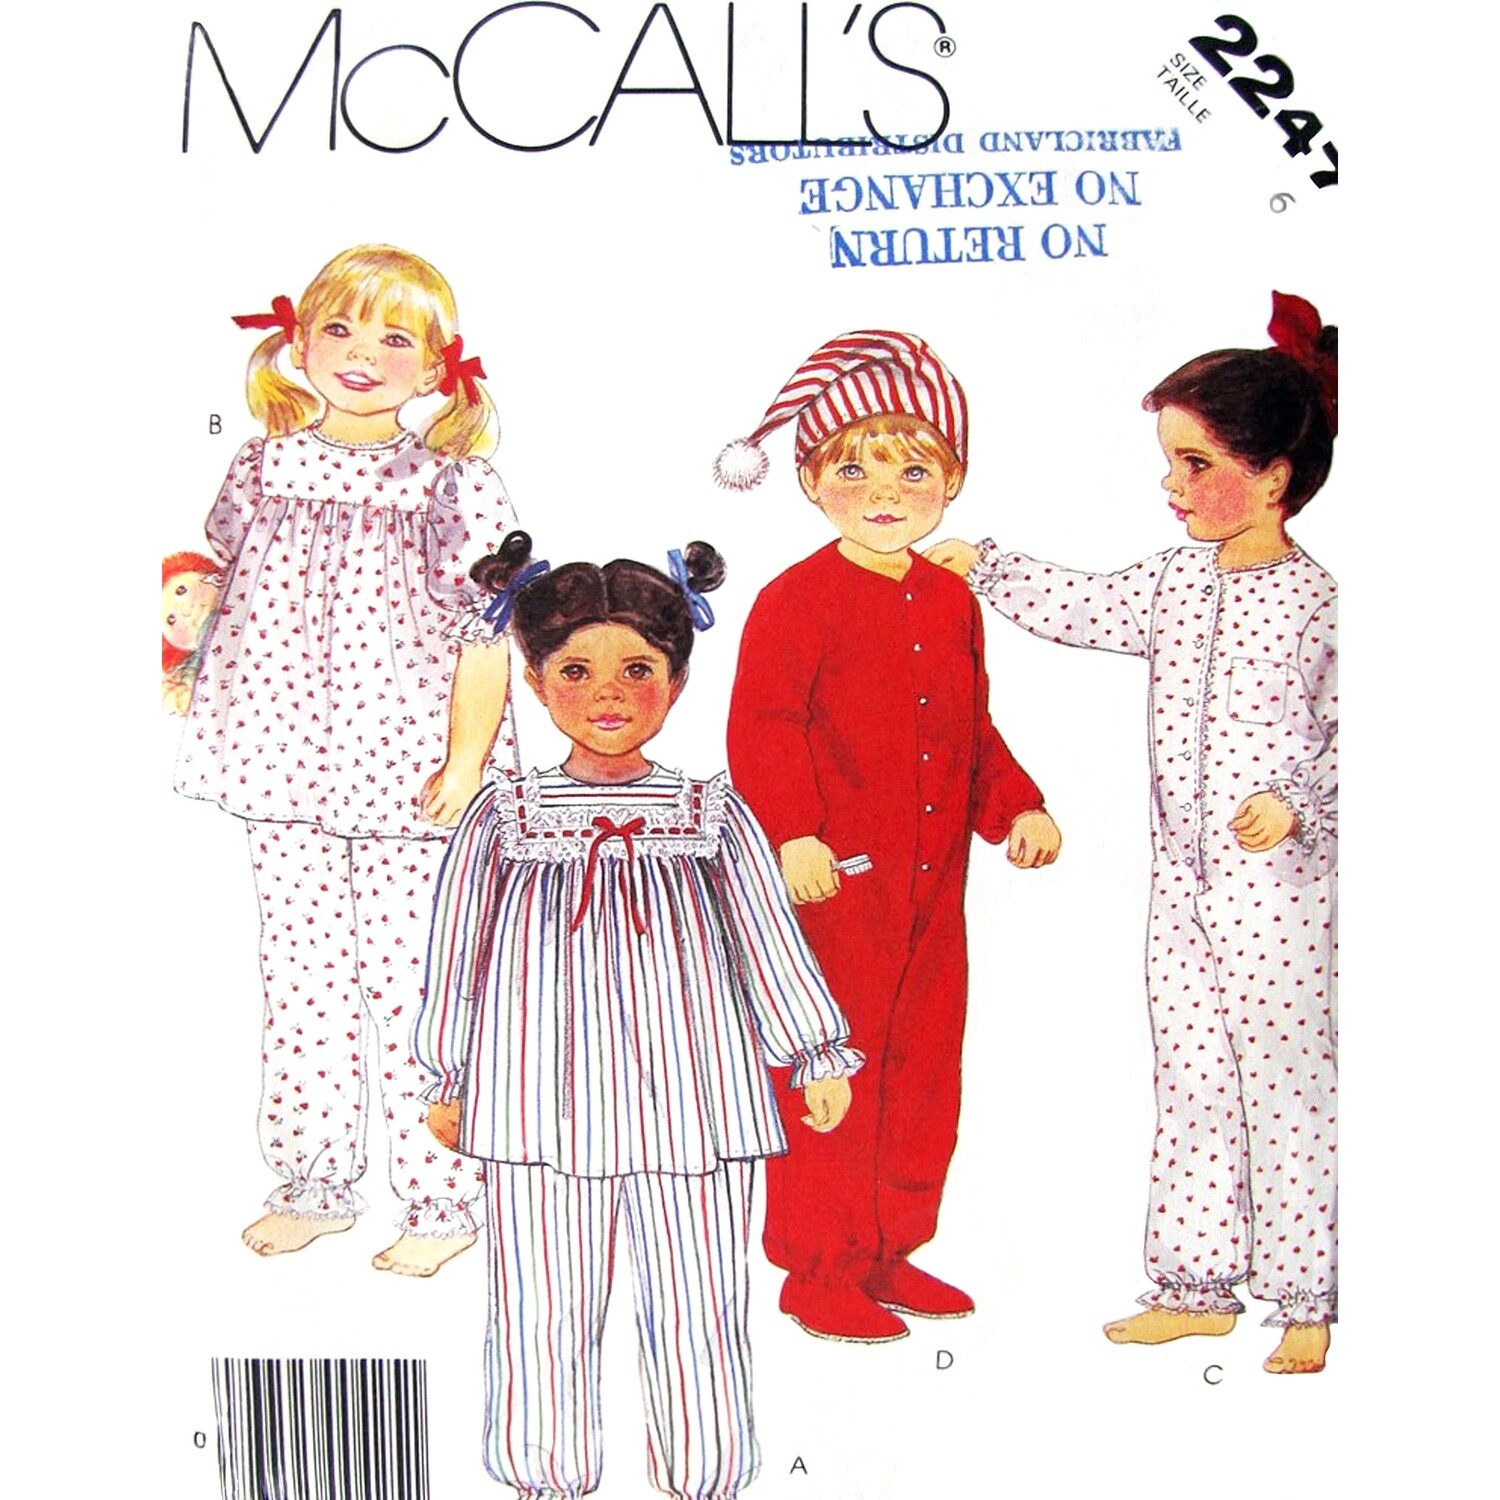 McCall's 2247 pattern